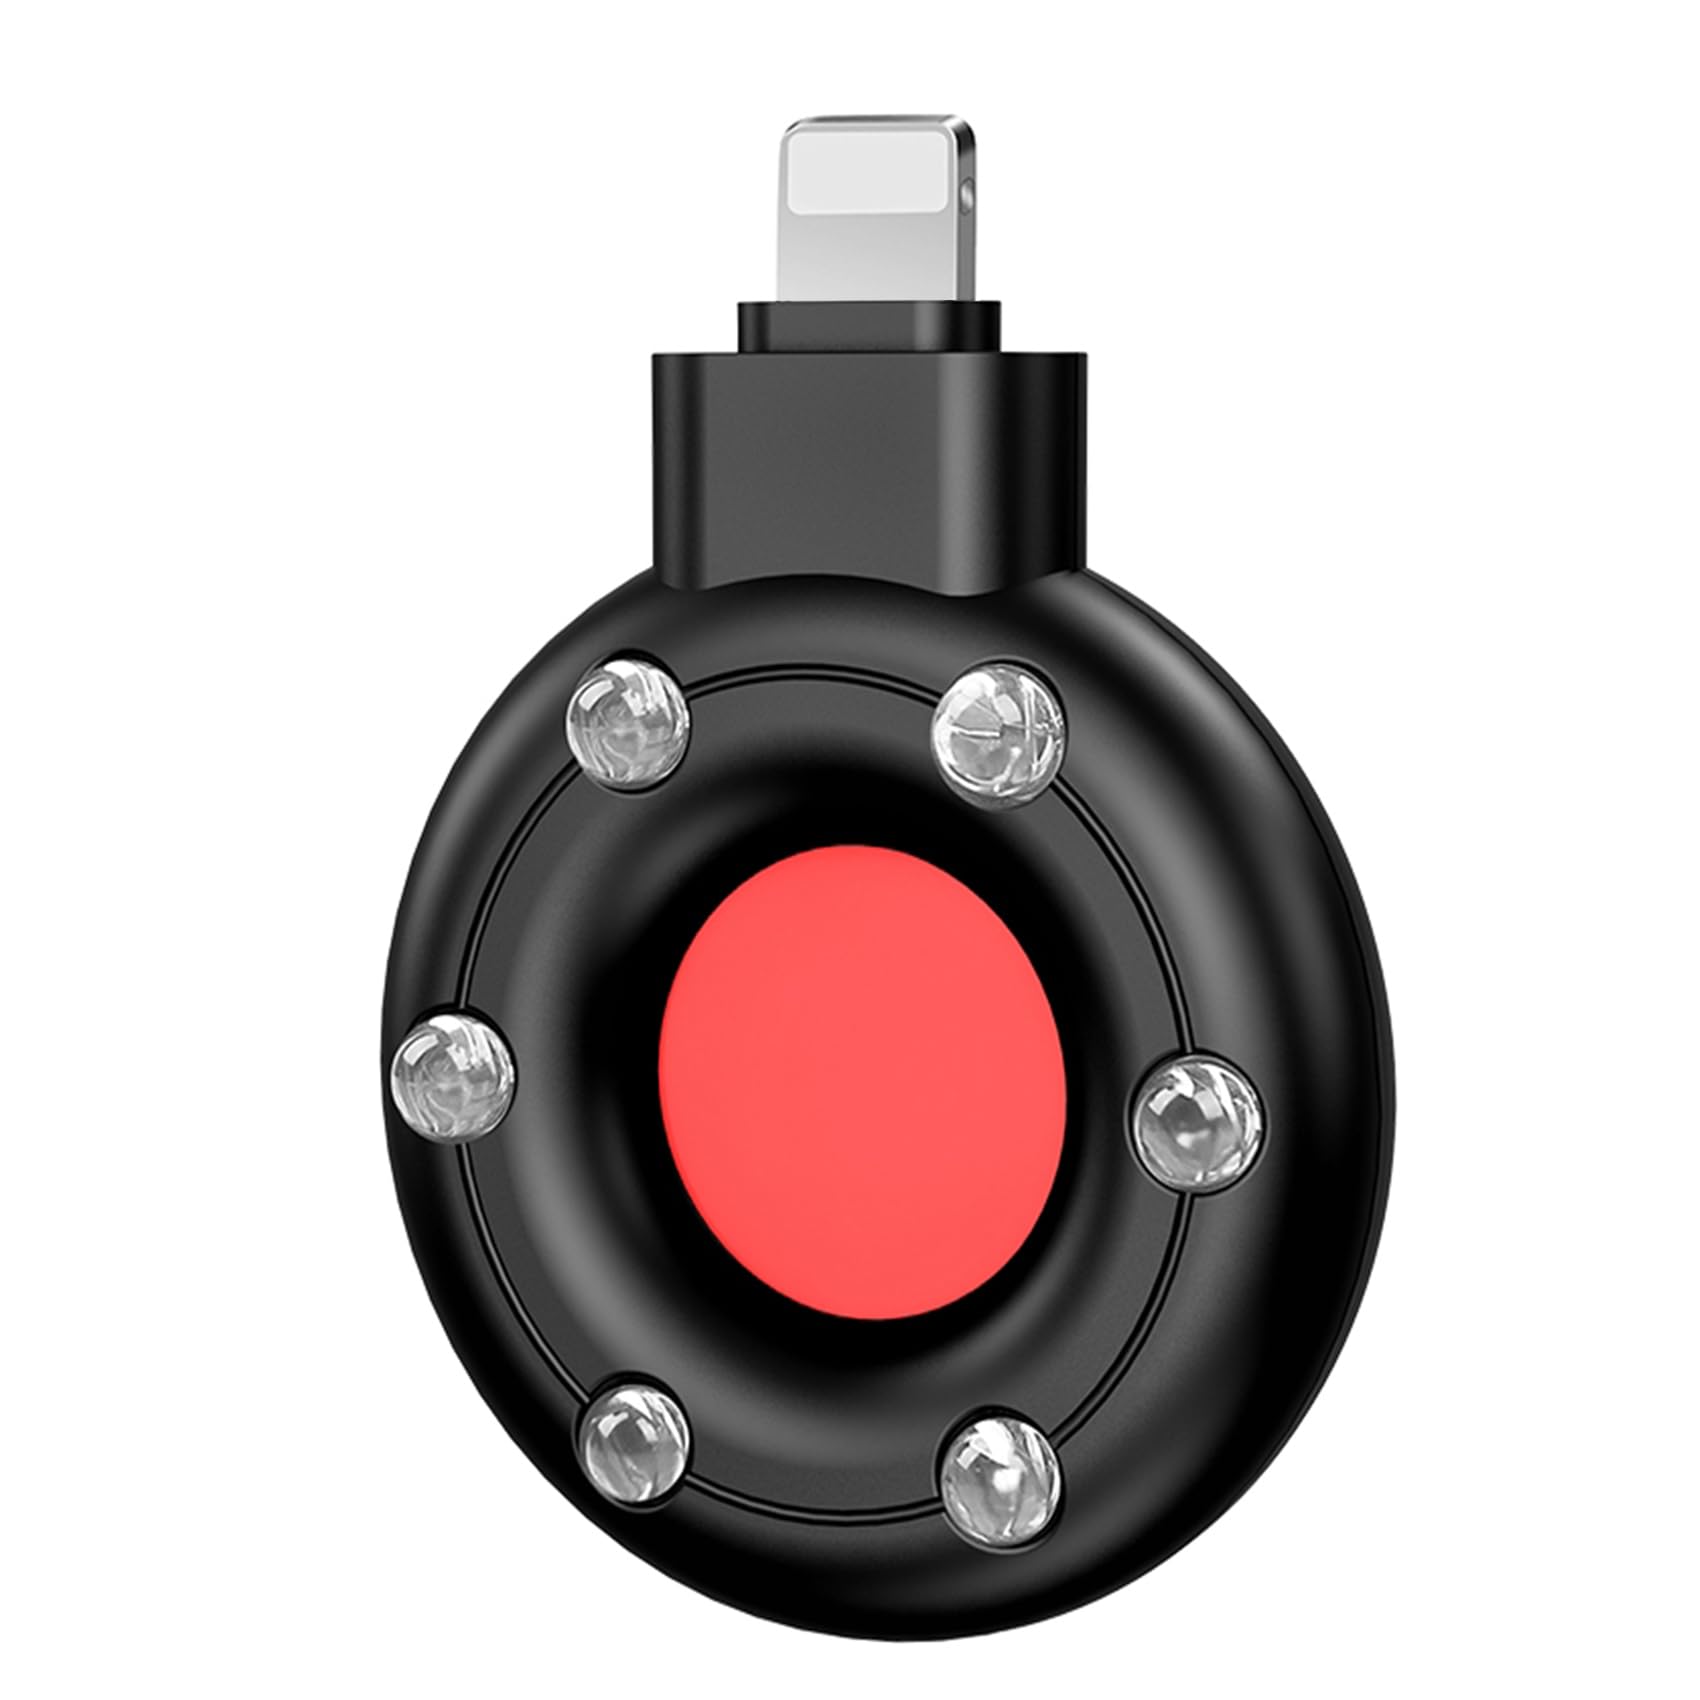 BJR Mini versteckte Kamera Detektoren Anti Spy Detektor Kamera Finder Spion LED Versteckte Gerät Detektor mit Infrarot-Sucher Taschenformat Lightning Charging (Lightning Black)